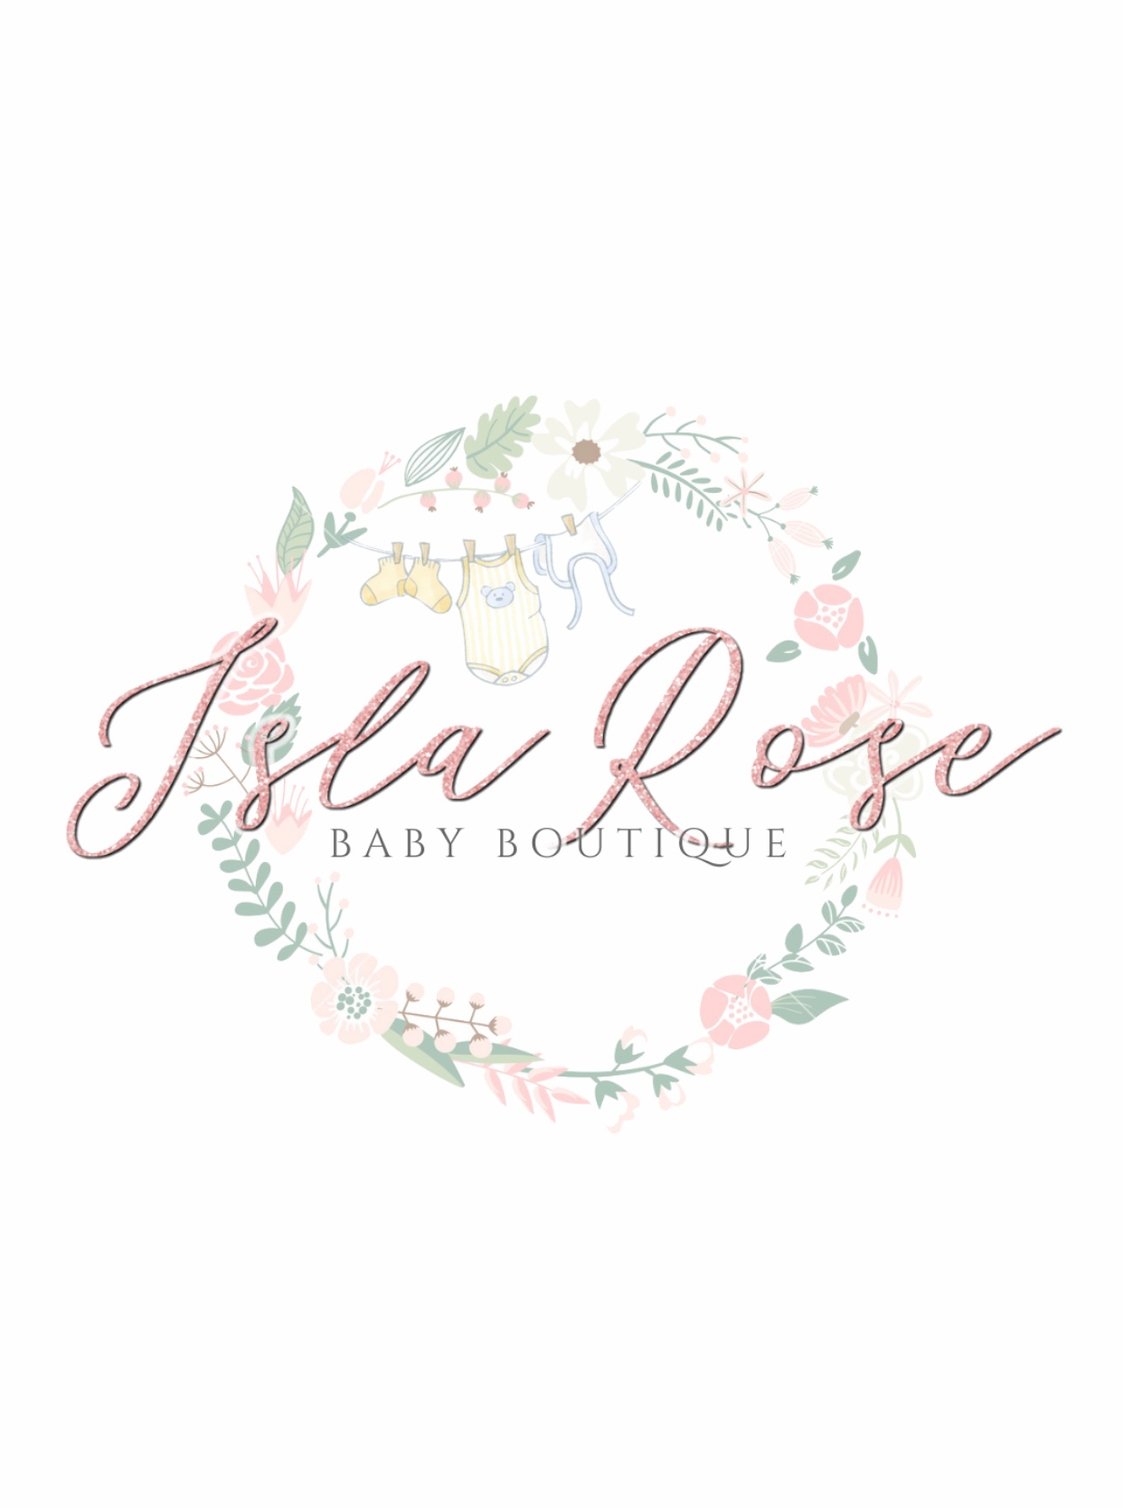 Isla rose baby boutique 